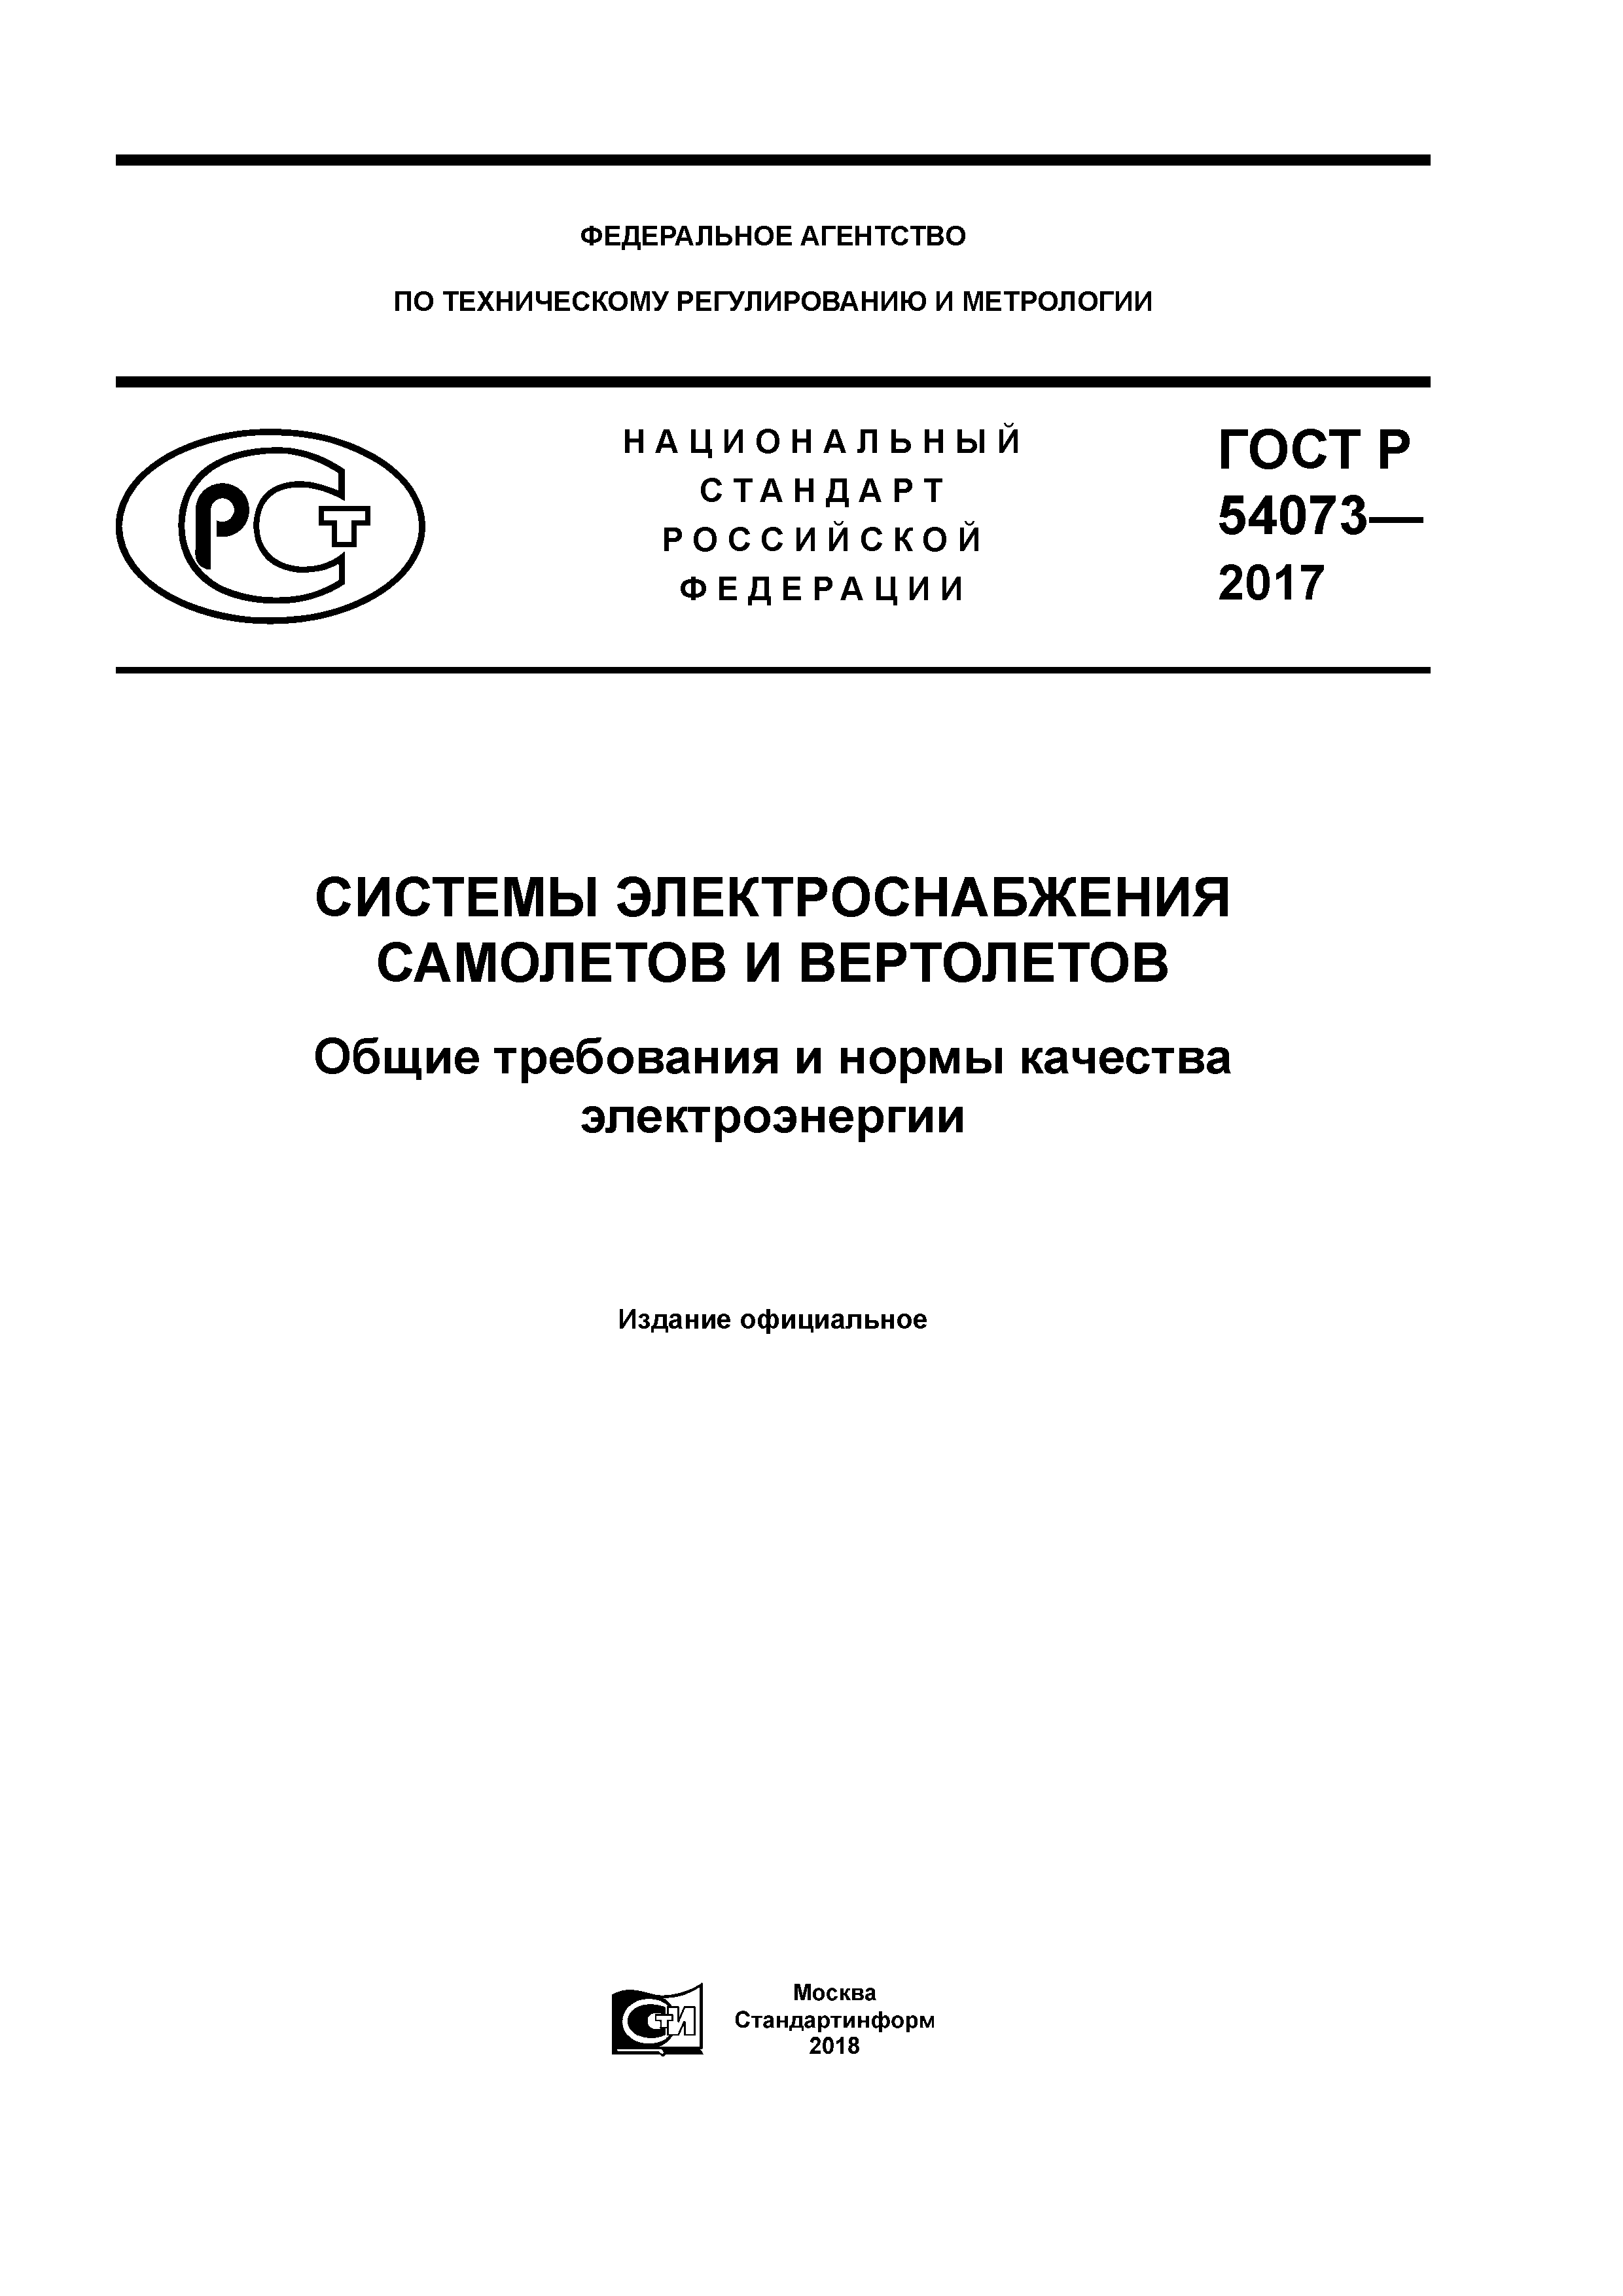 ГОСТ Р 54073-2017